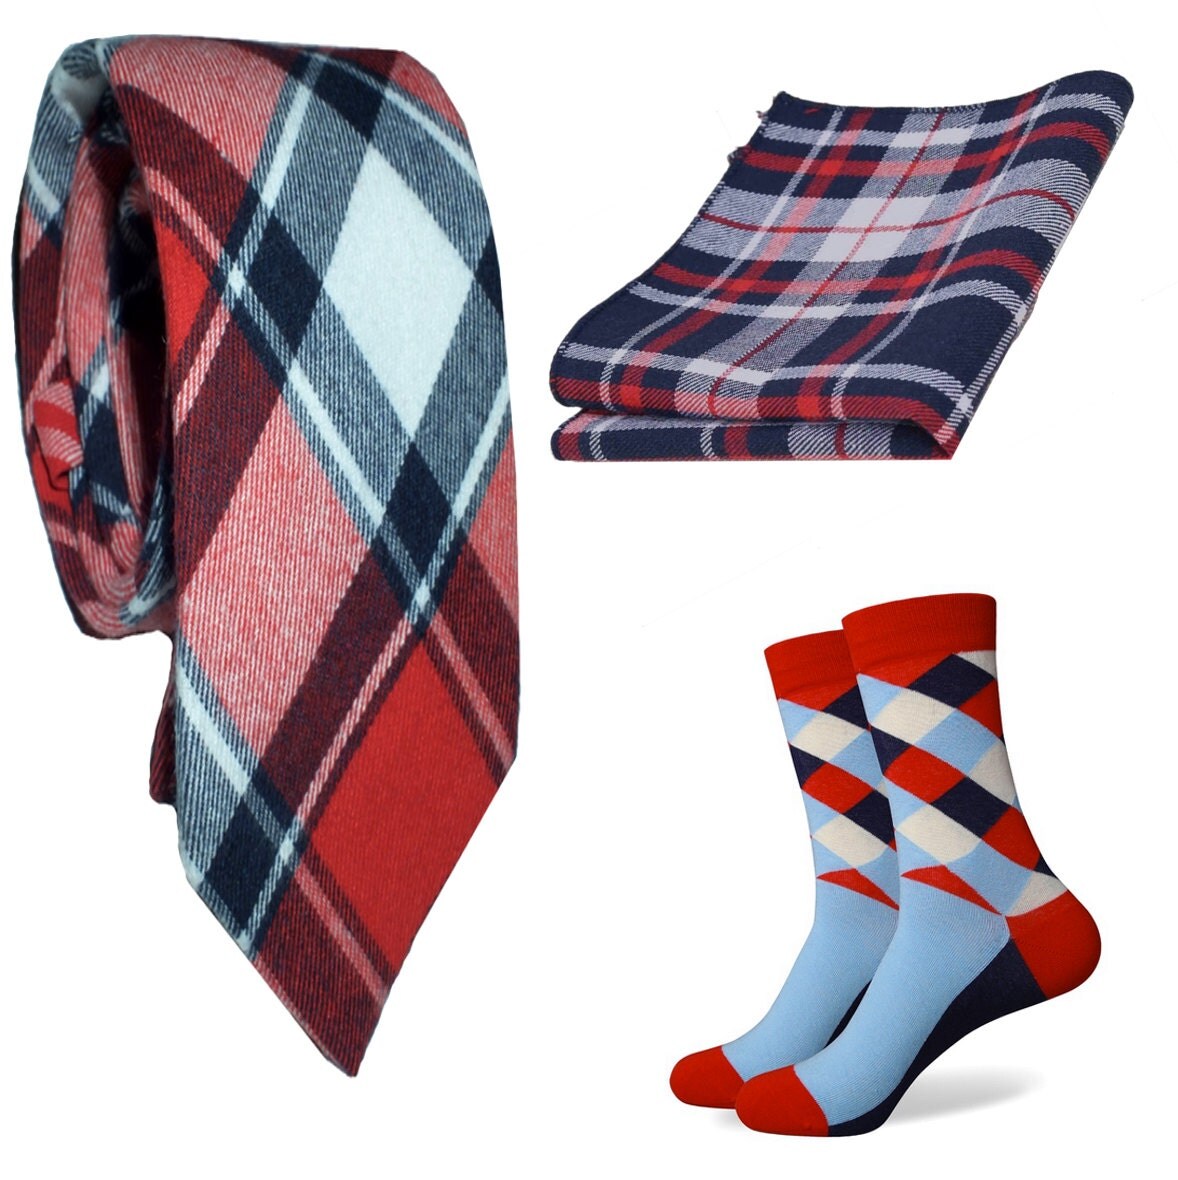 Matching Mens Socks Tie & Pocket Square Blue Navy by TiedUpInSocks